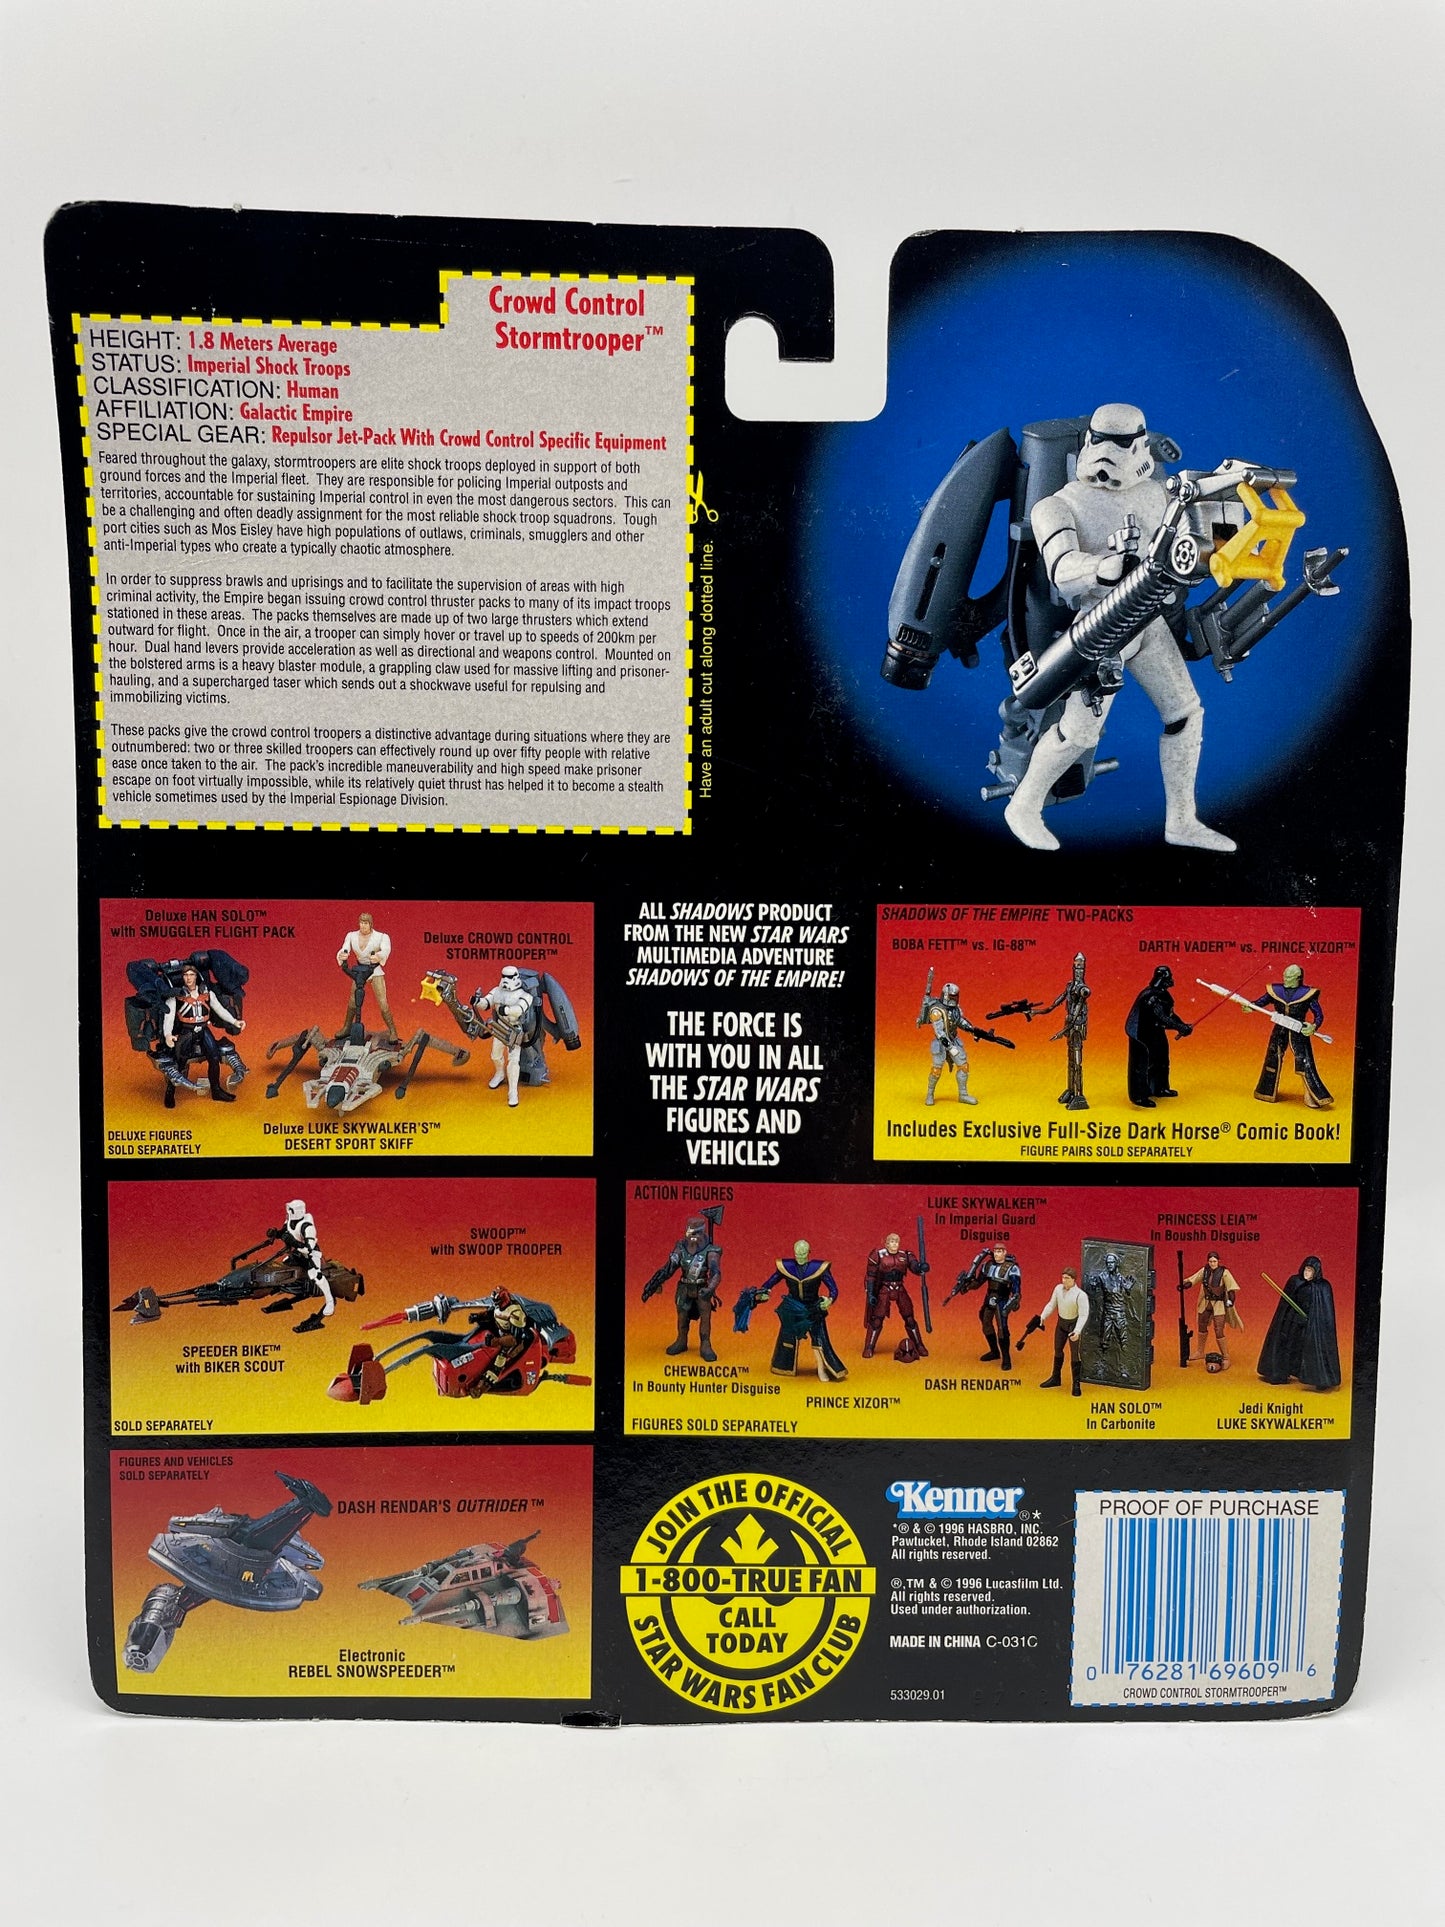 Power of the Force Stormtrooper Deluxe Figure Set, Hasbro 1996